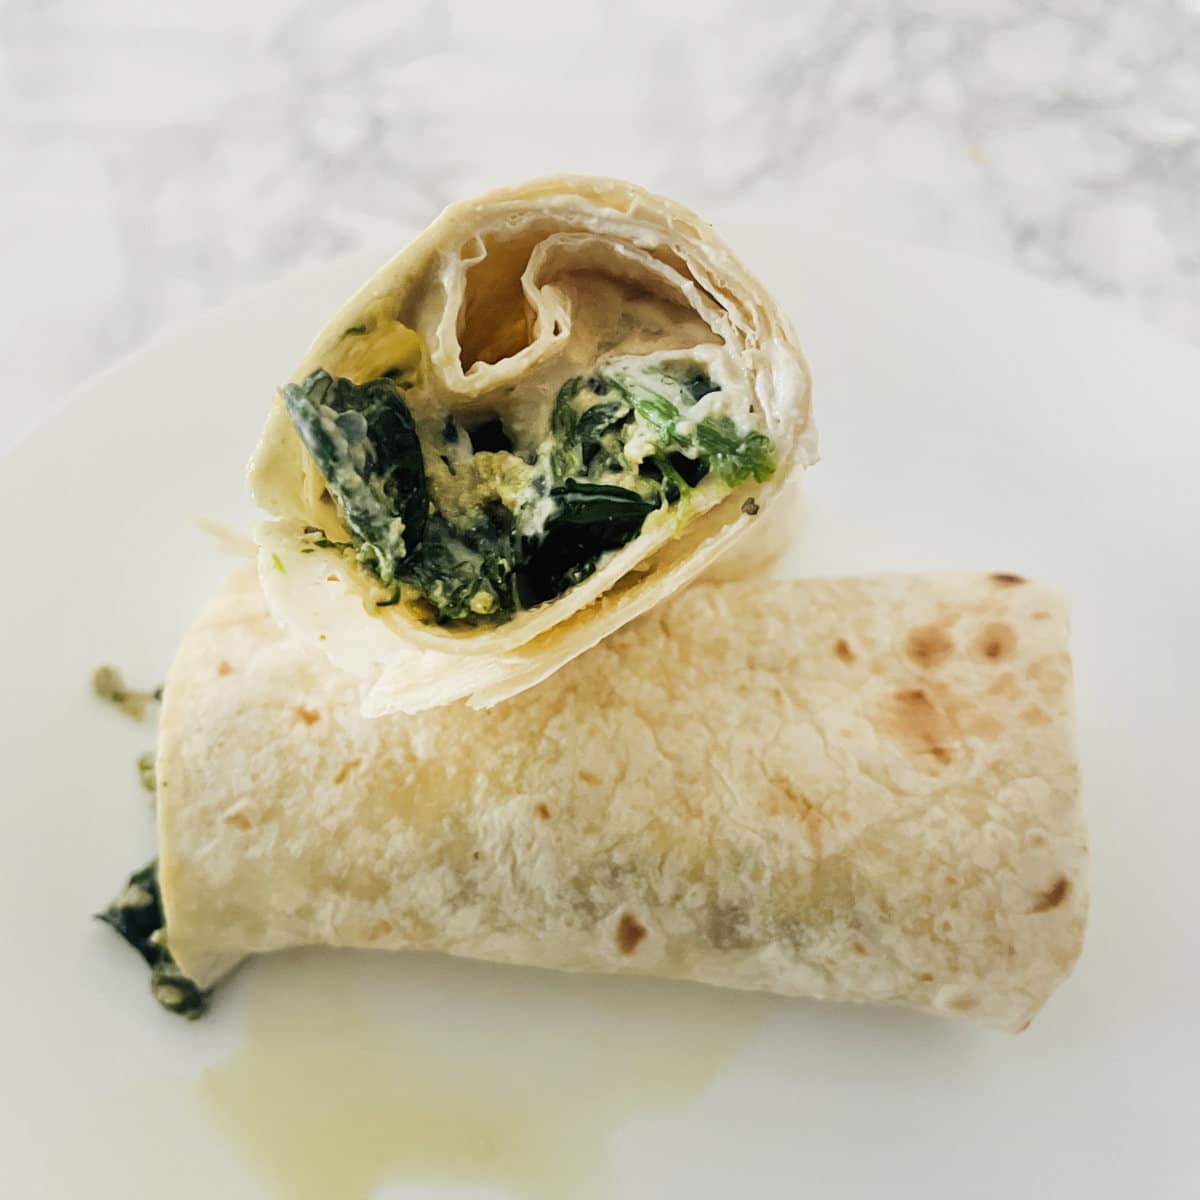 Spinach mushroom egg wrap